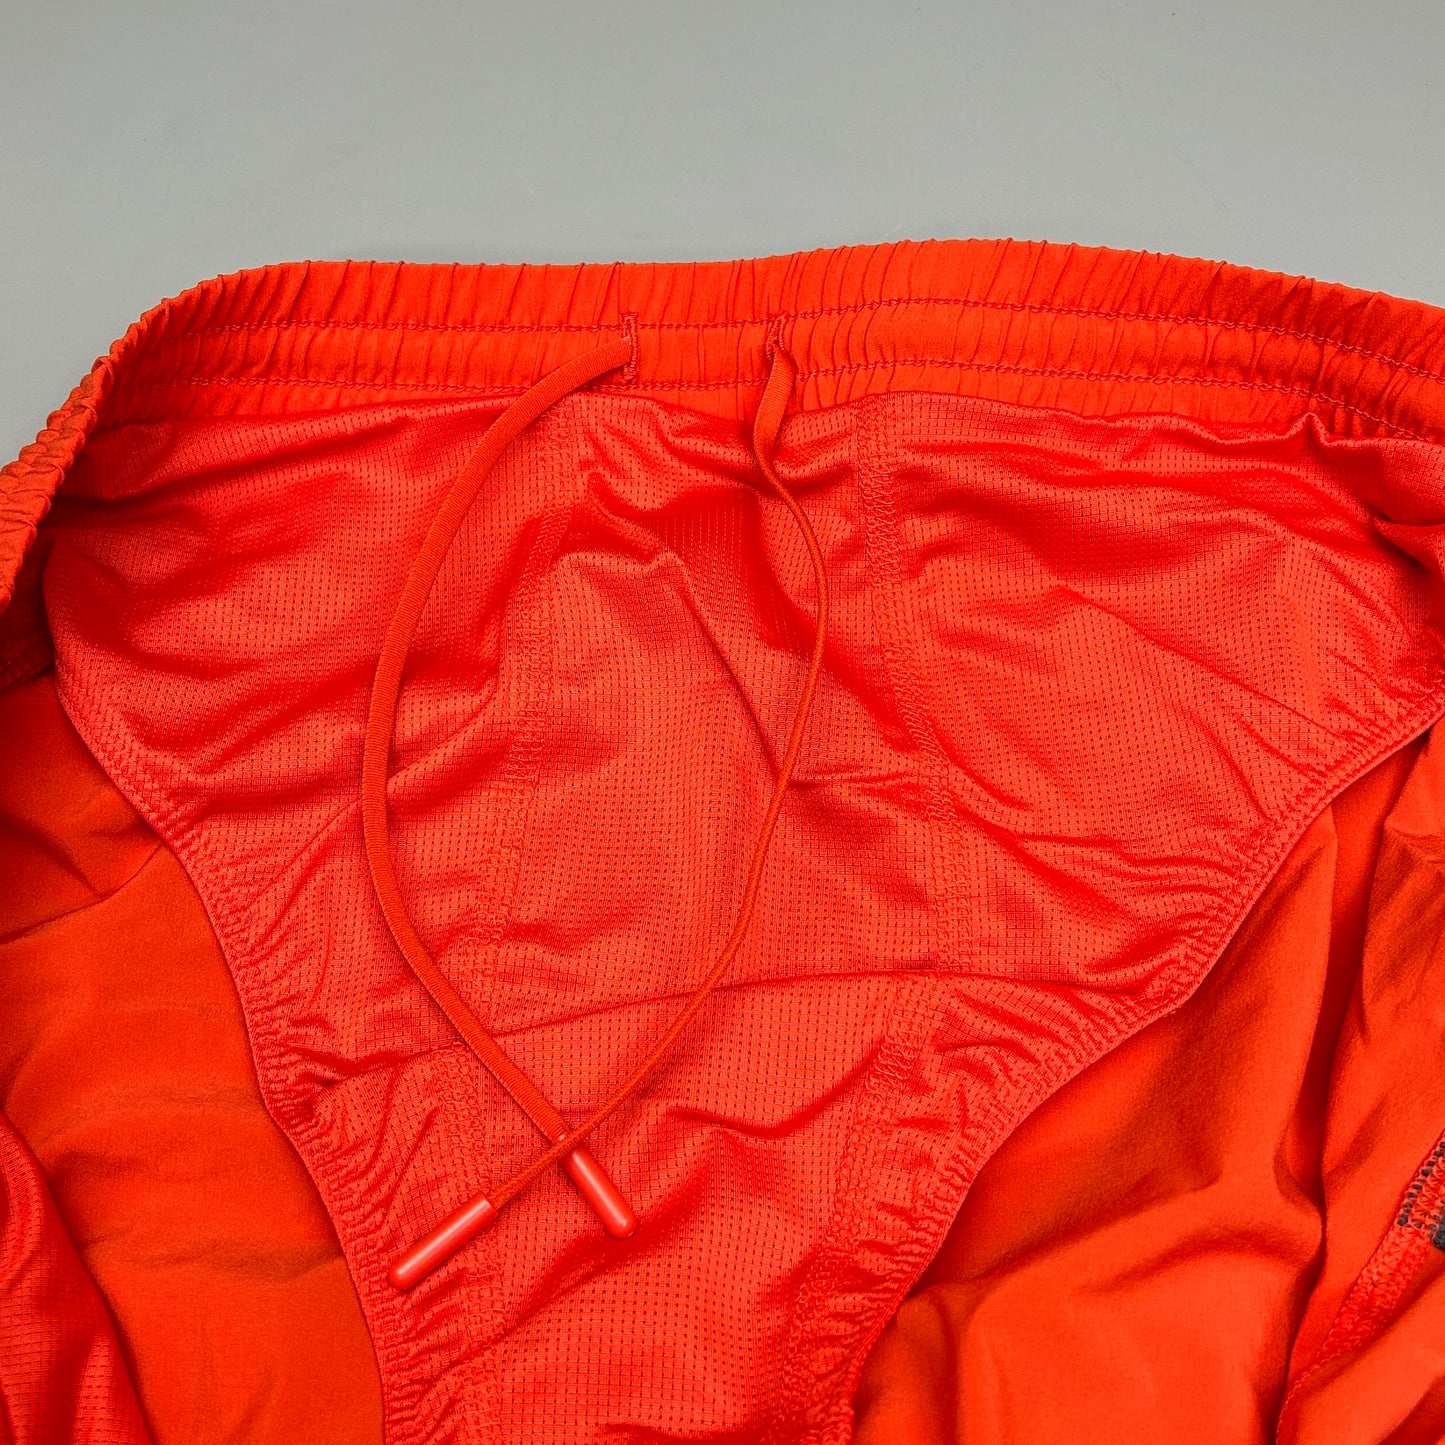 ALL IN MOTION Men's Lined Run Shorts 5" Dark Orange Sz XXL (New)